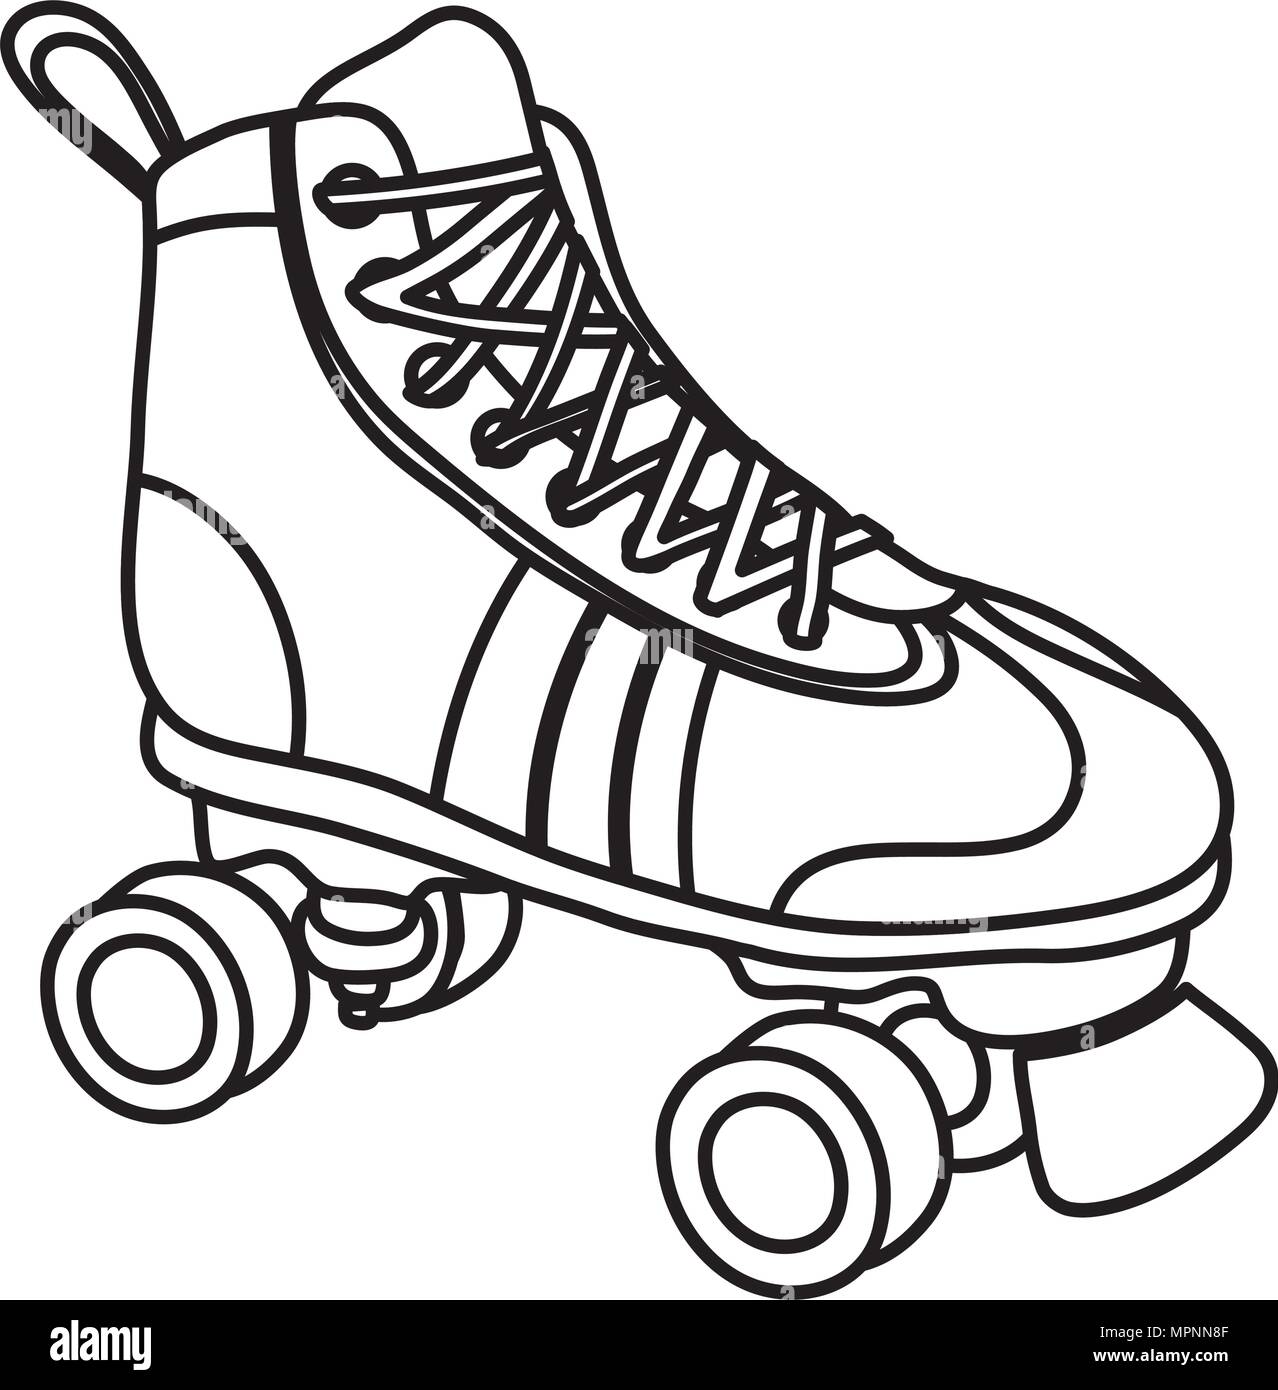 Roller Skate ligne sport fun style vector illustration Image Vectorielle  Stock - Alamy